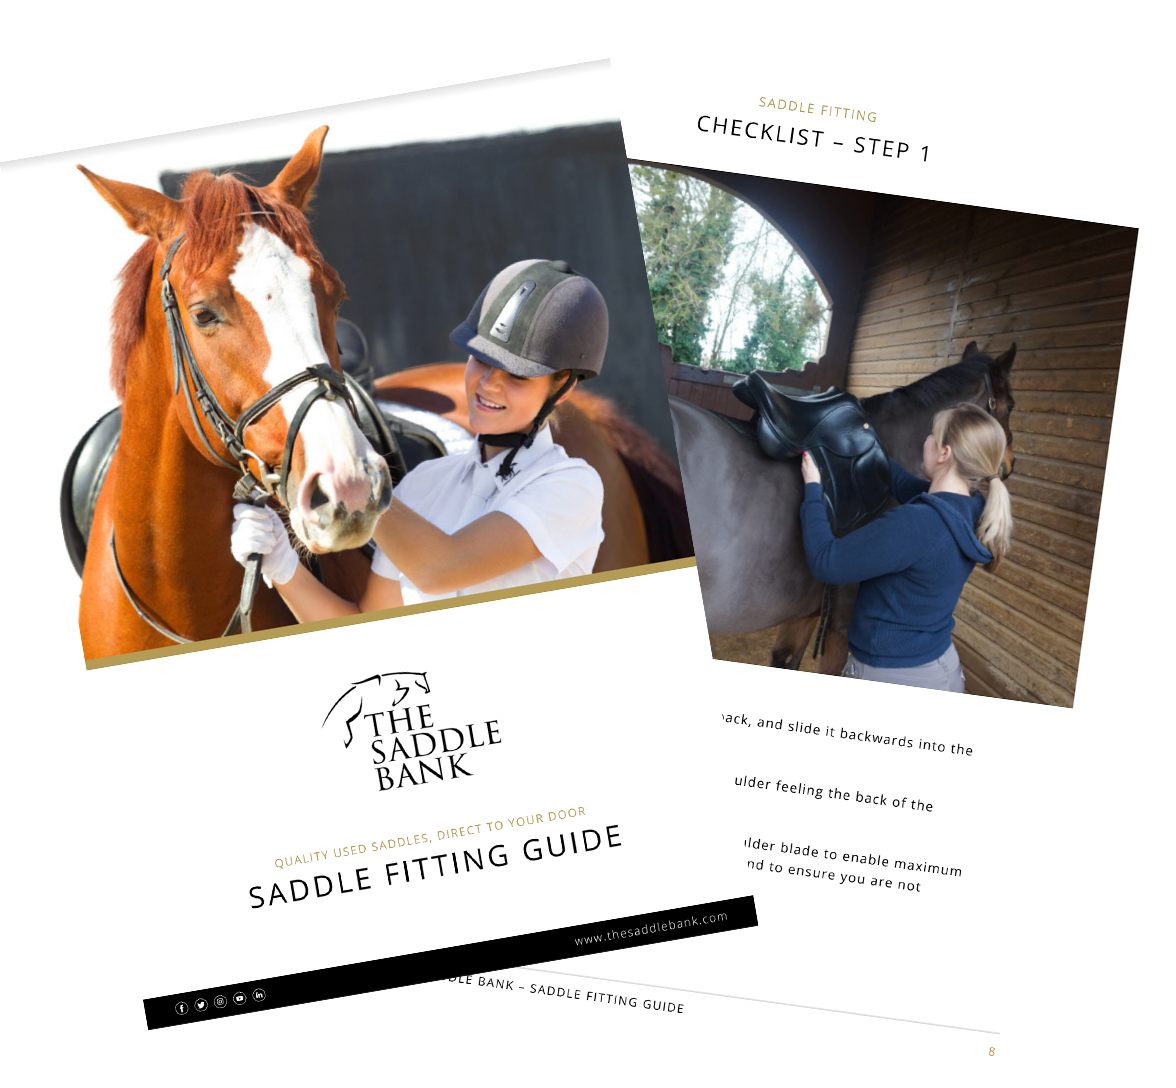 Free saddle fitting guide screenshots